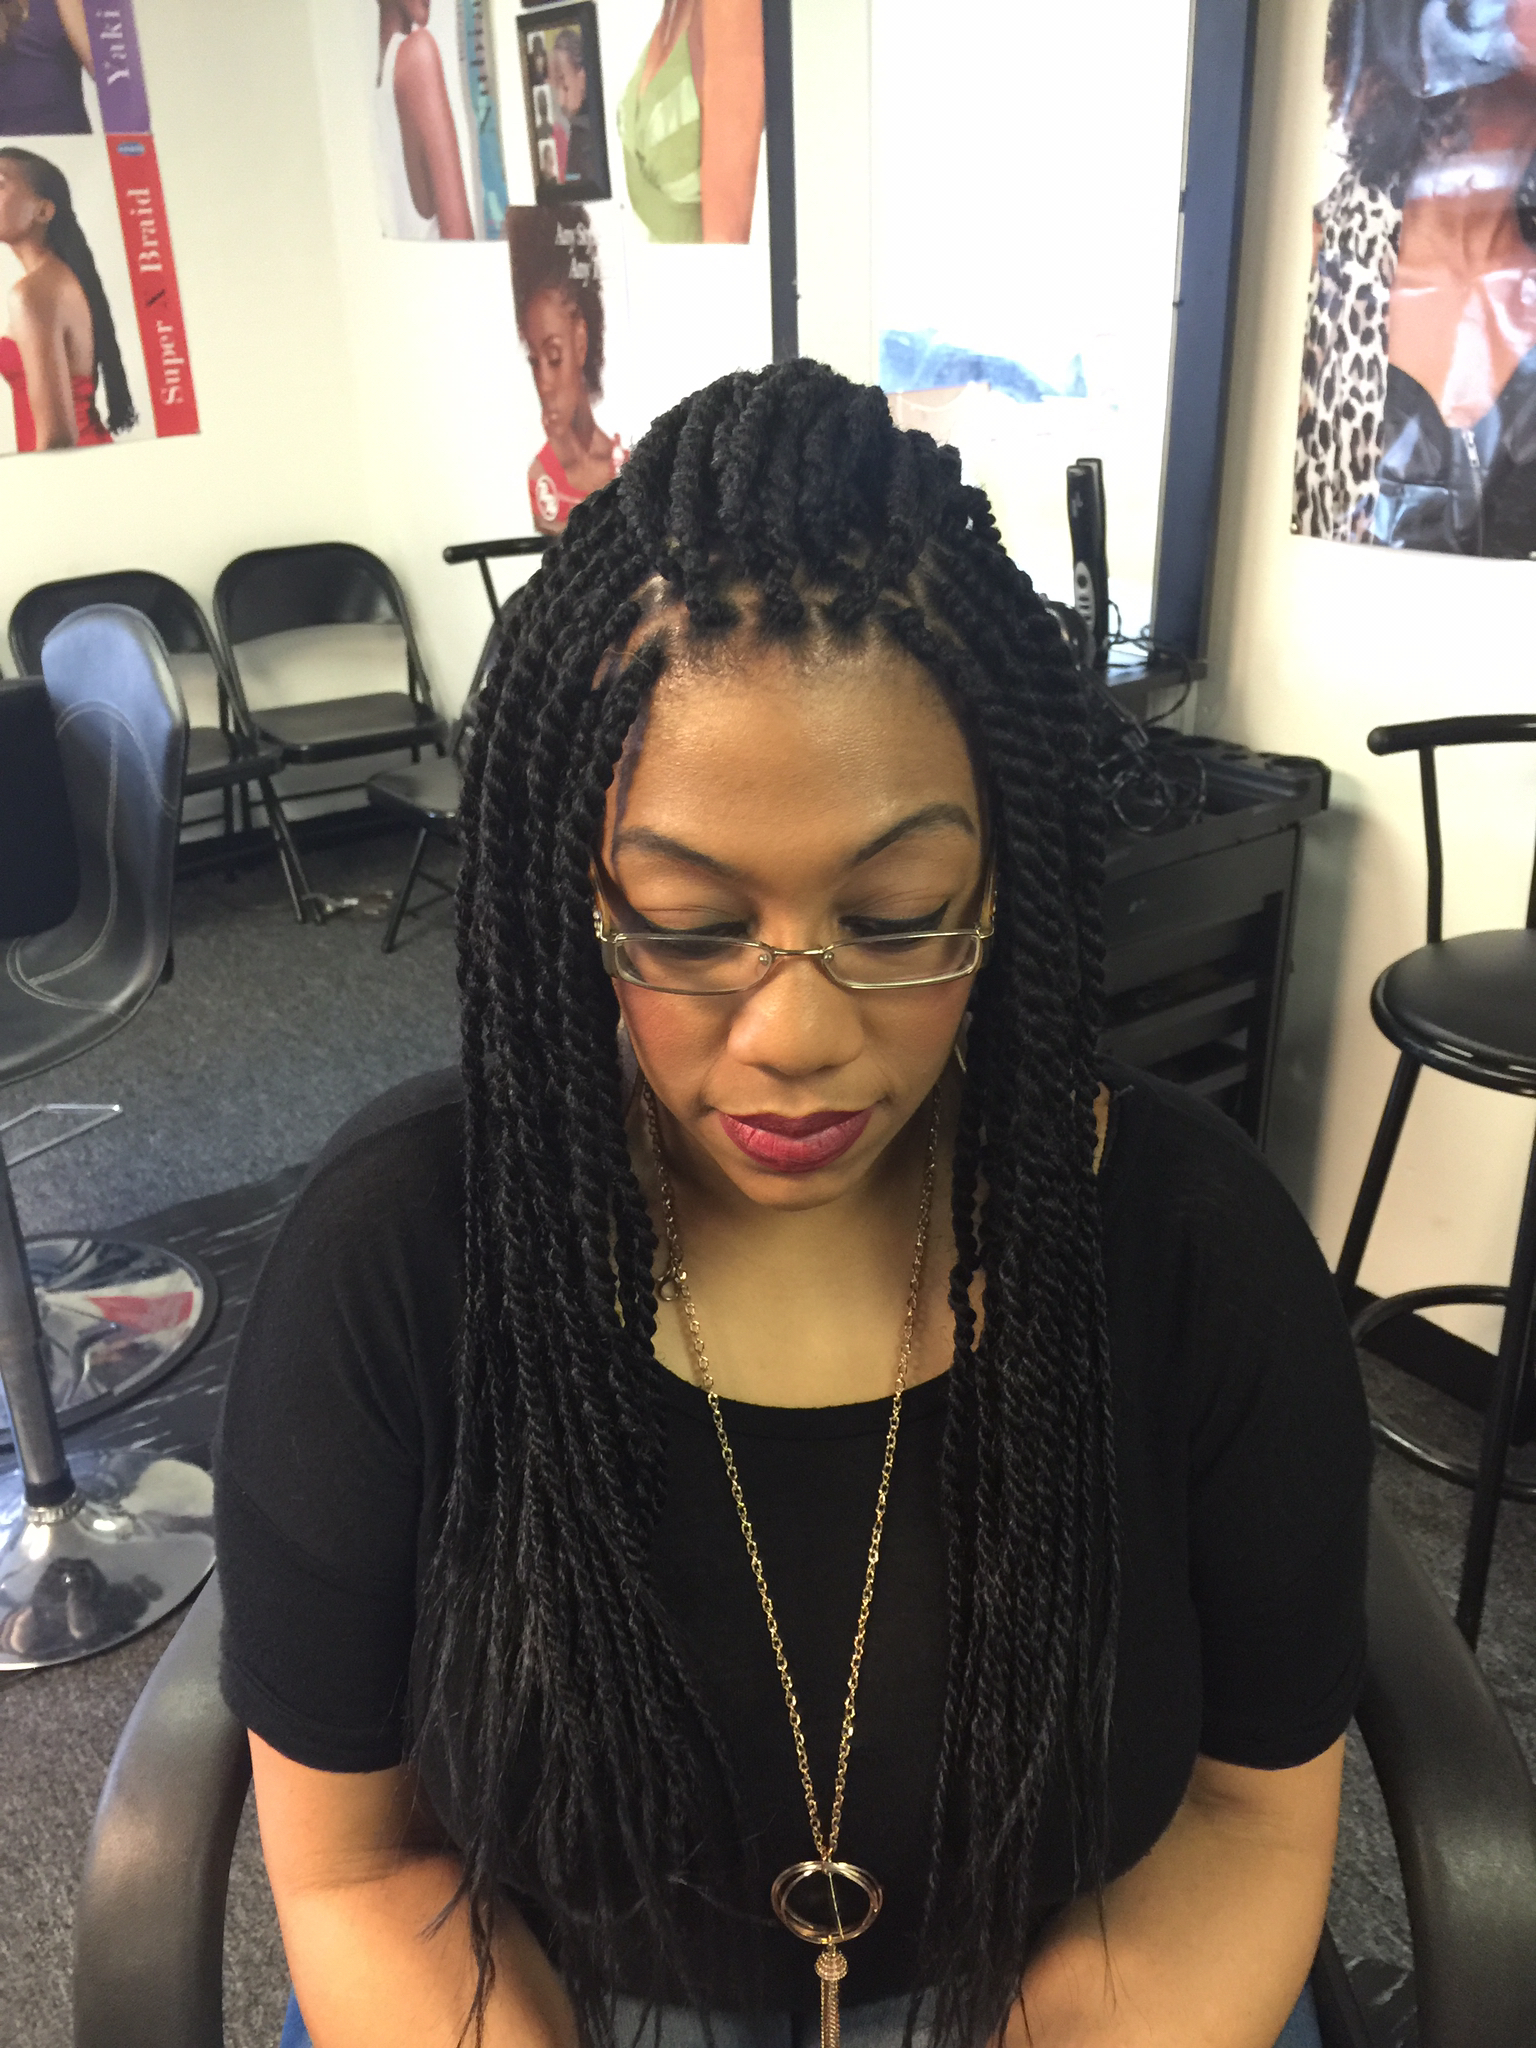 Fatima African Hair Braiding/leaticia 3716 Nolensville ...